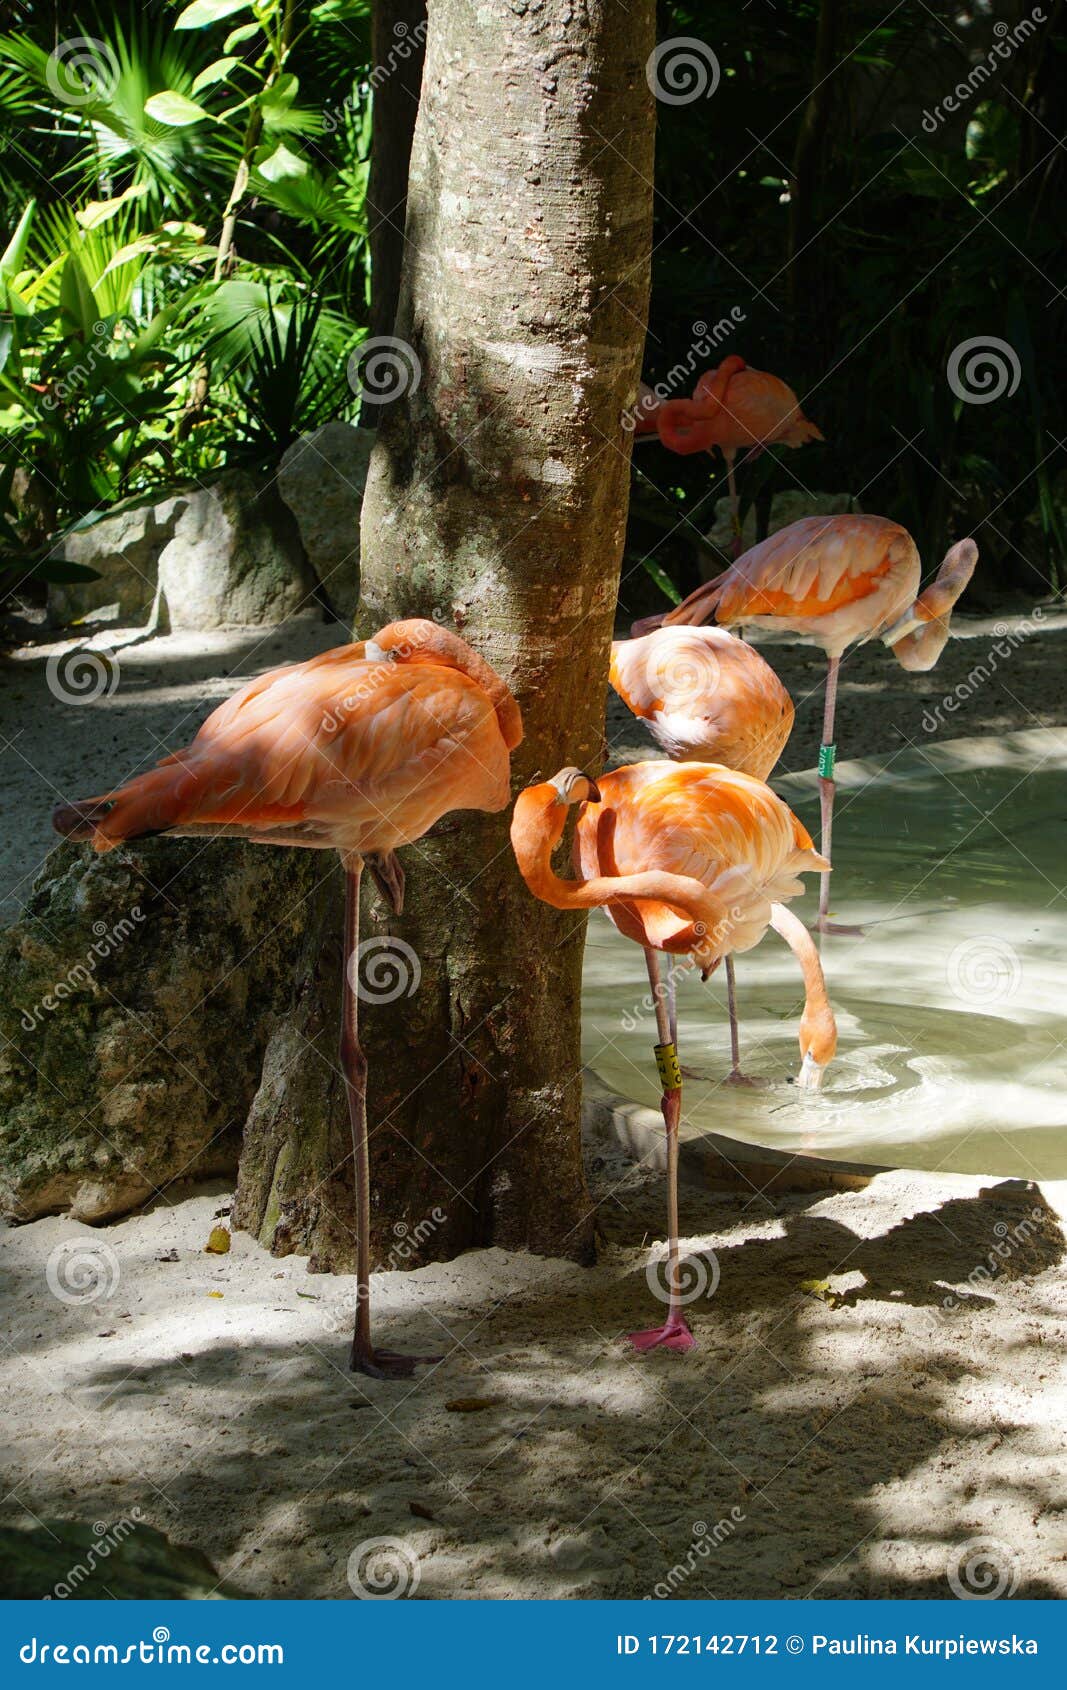 flamingoes in yucatan peninsula, mexico